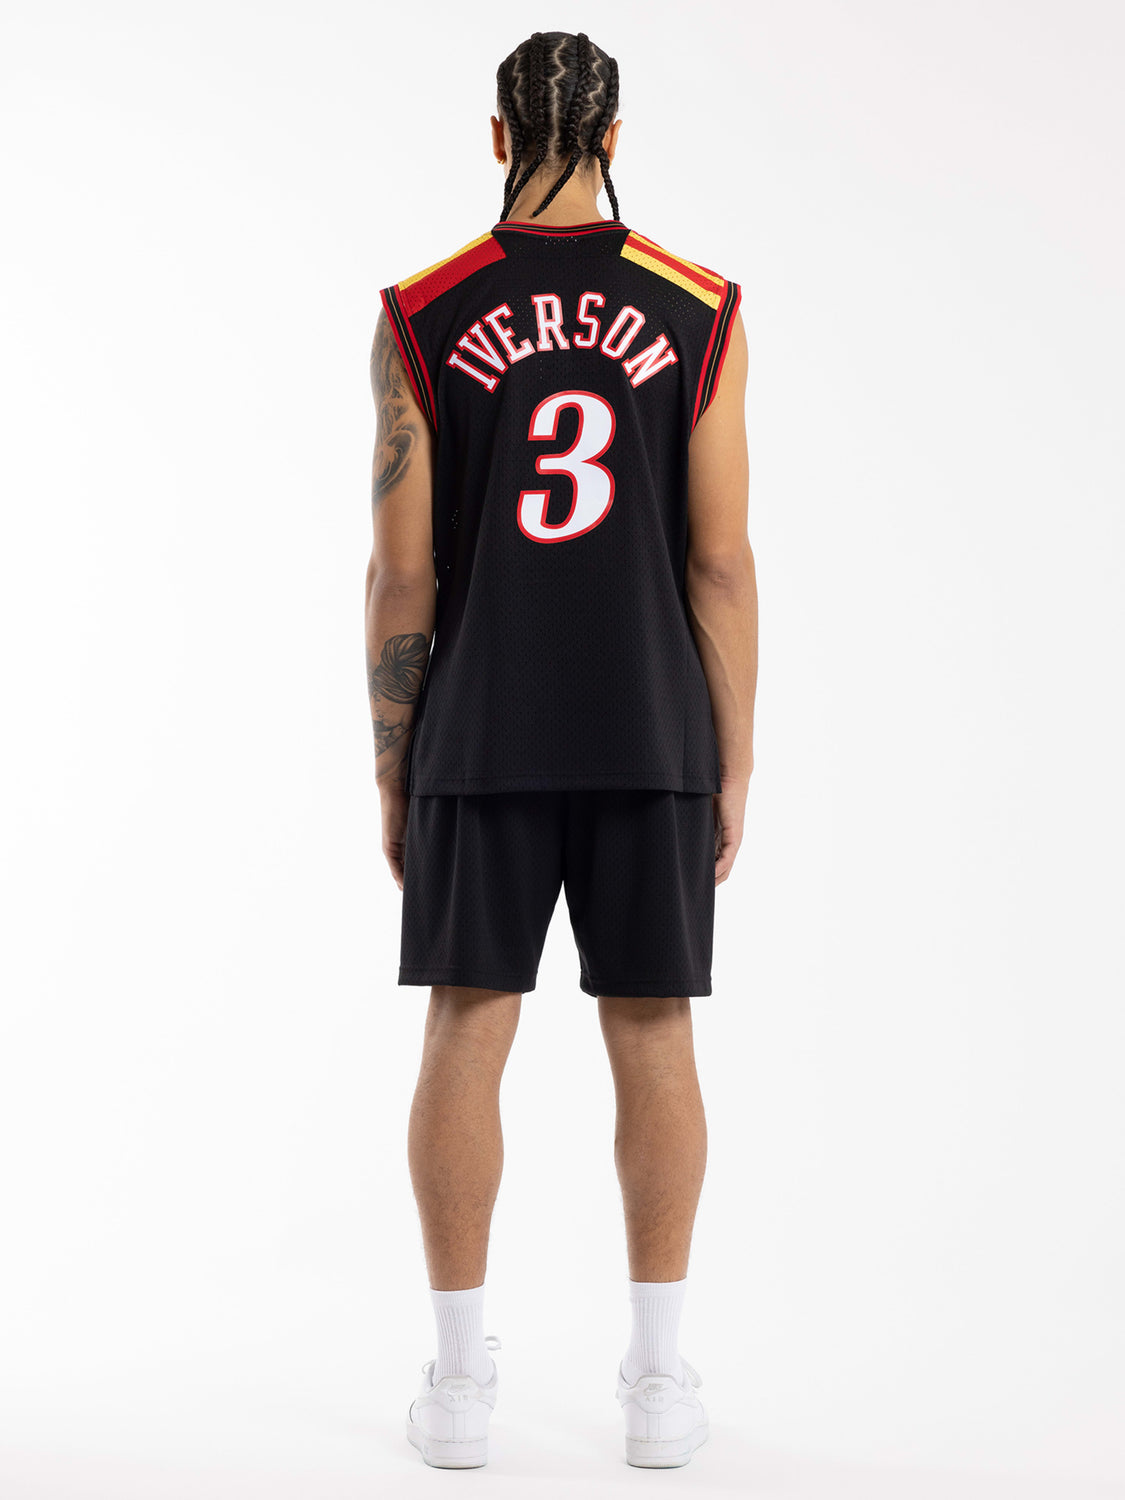 Philadelphia 76ers Jerseys & Teamwear, NBA Merch